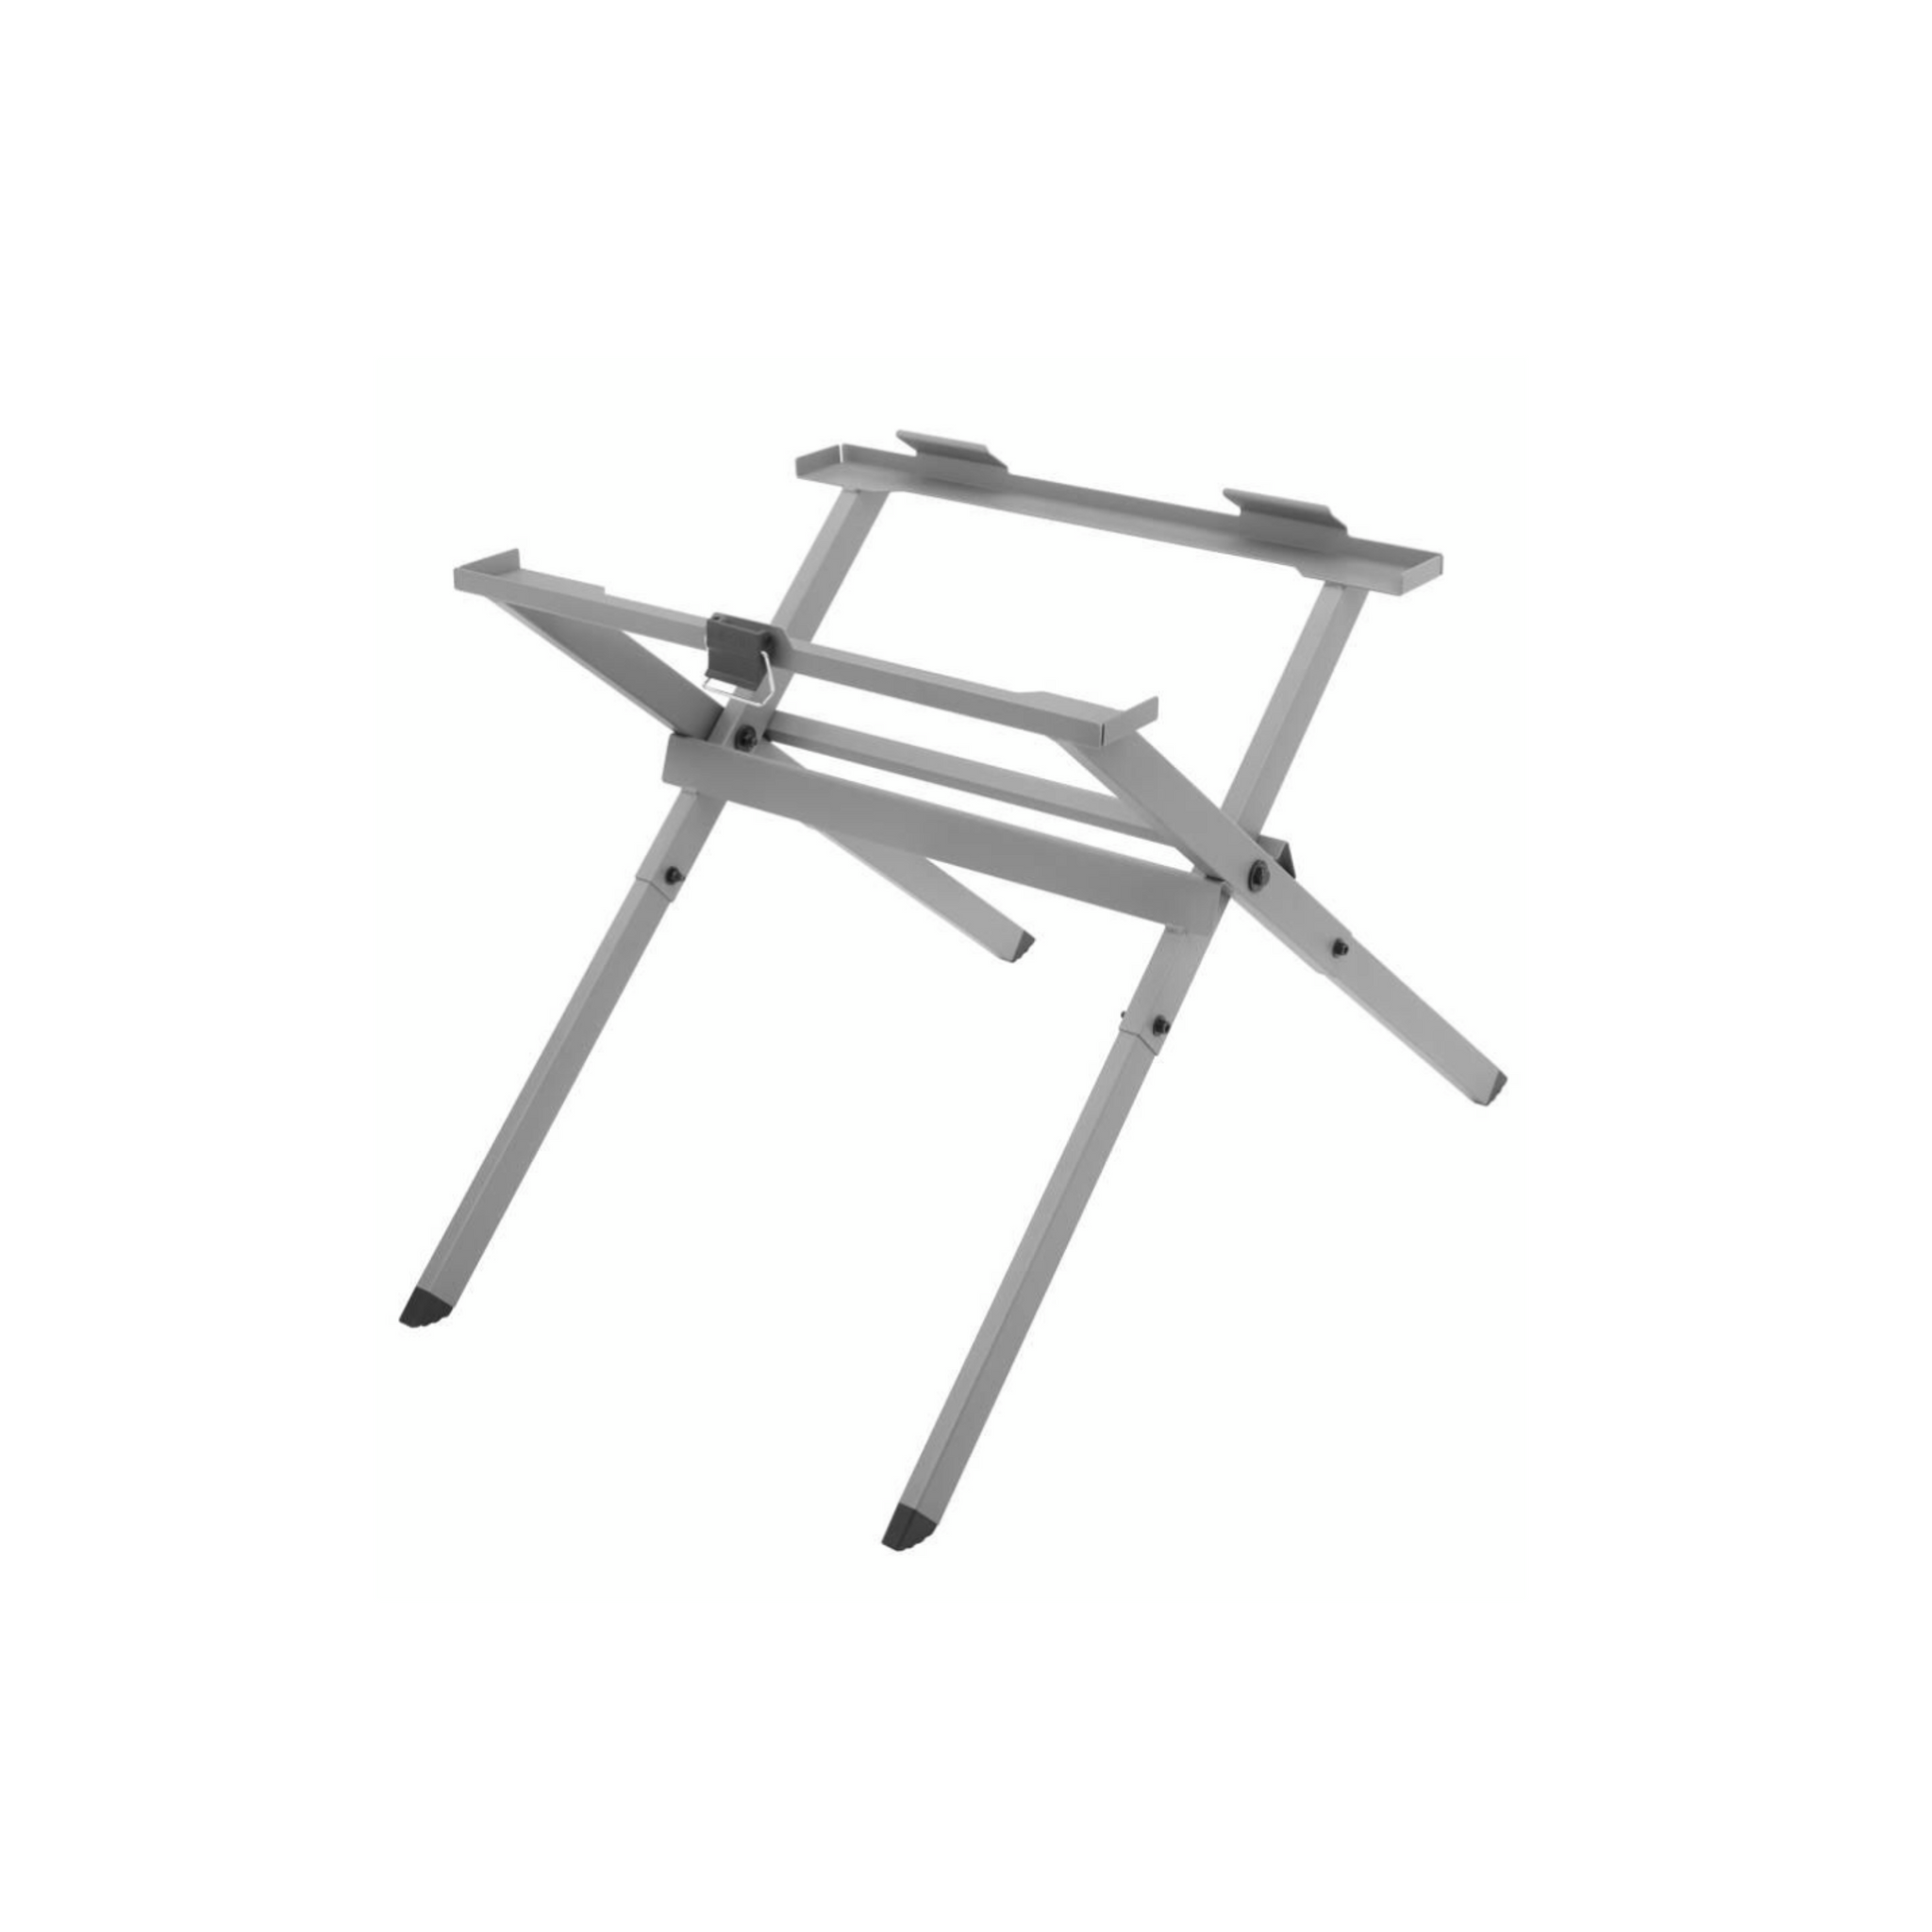 10 table saw with folding stand - RYOBI Tools